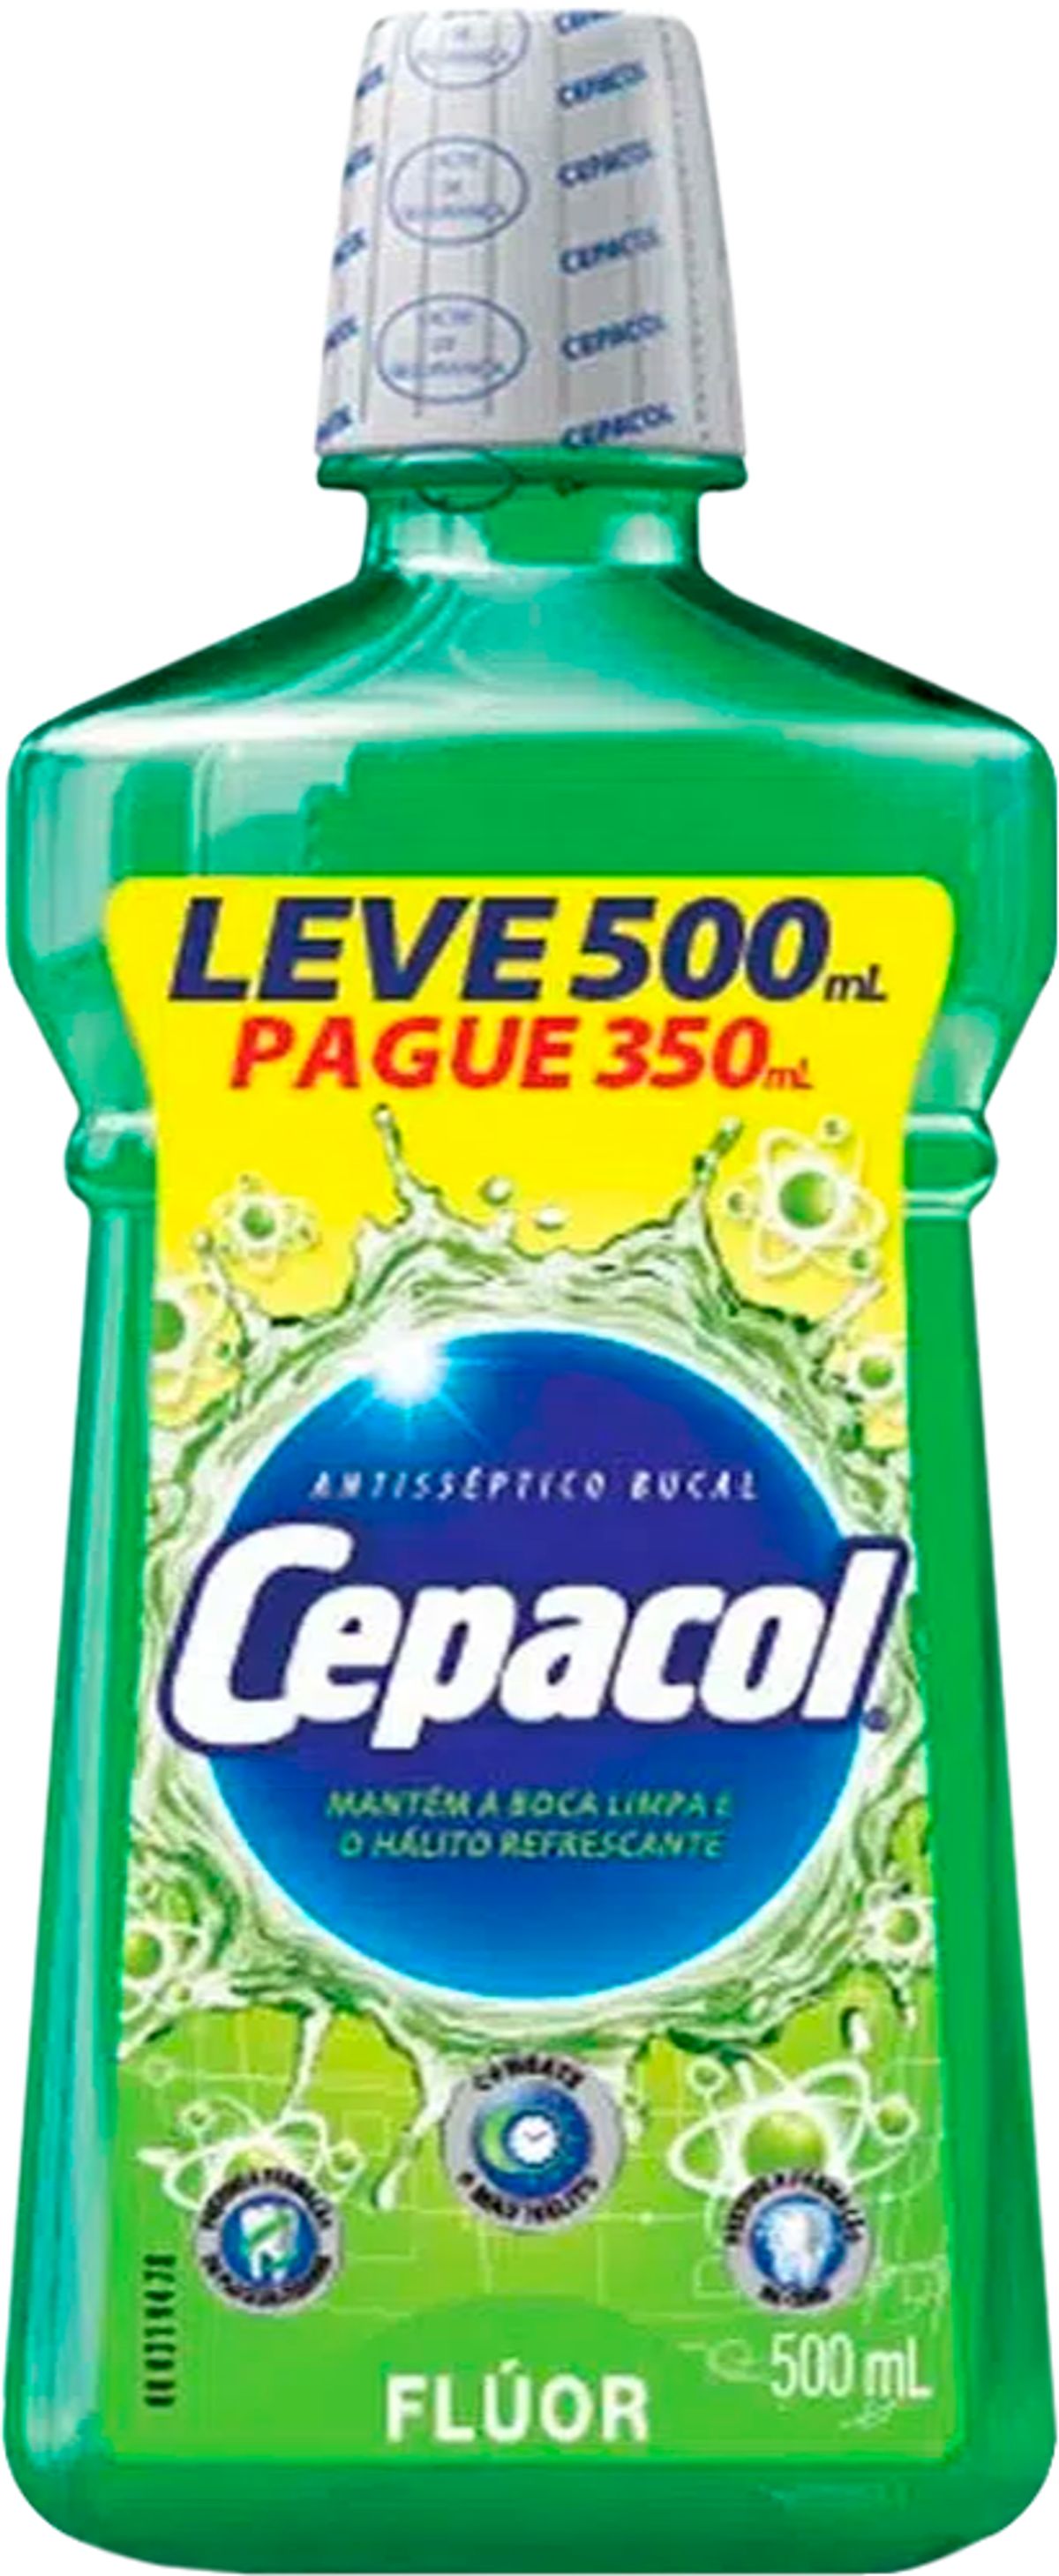 Enxaguante Bucal Cepacol Flúor Leve 500ml Pague 350ml